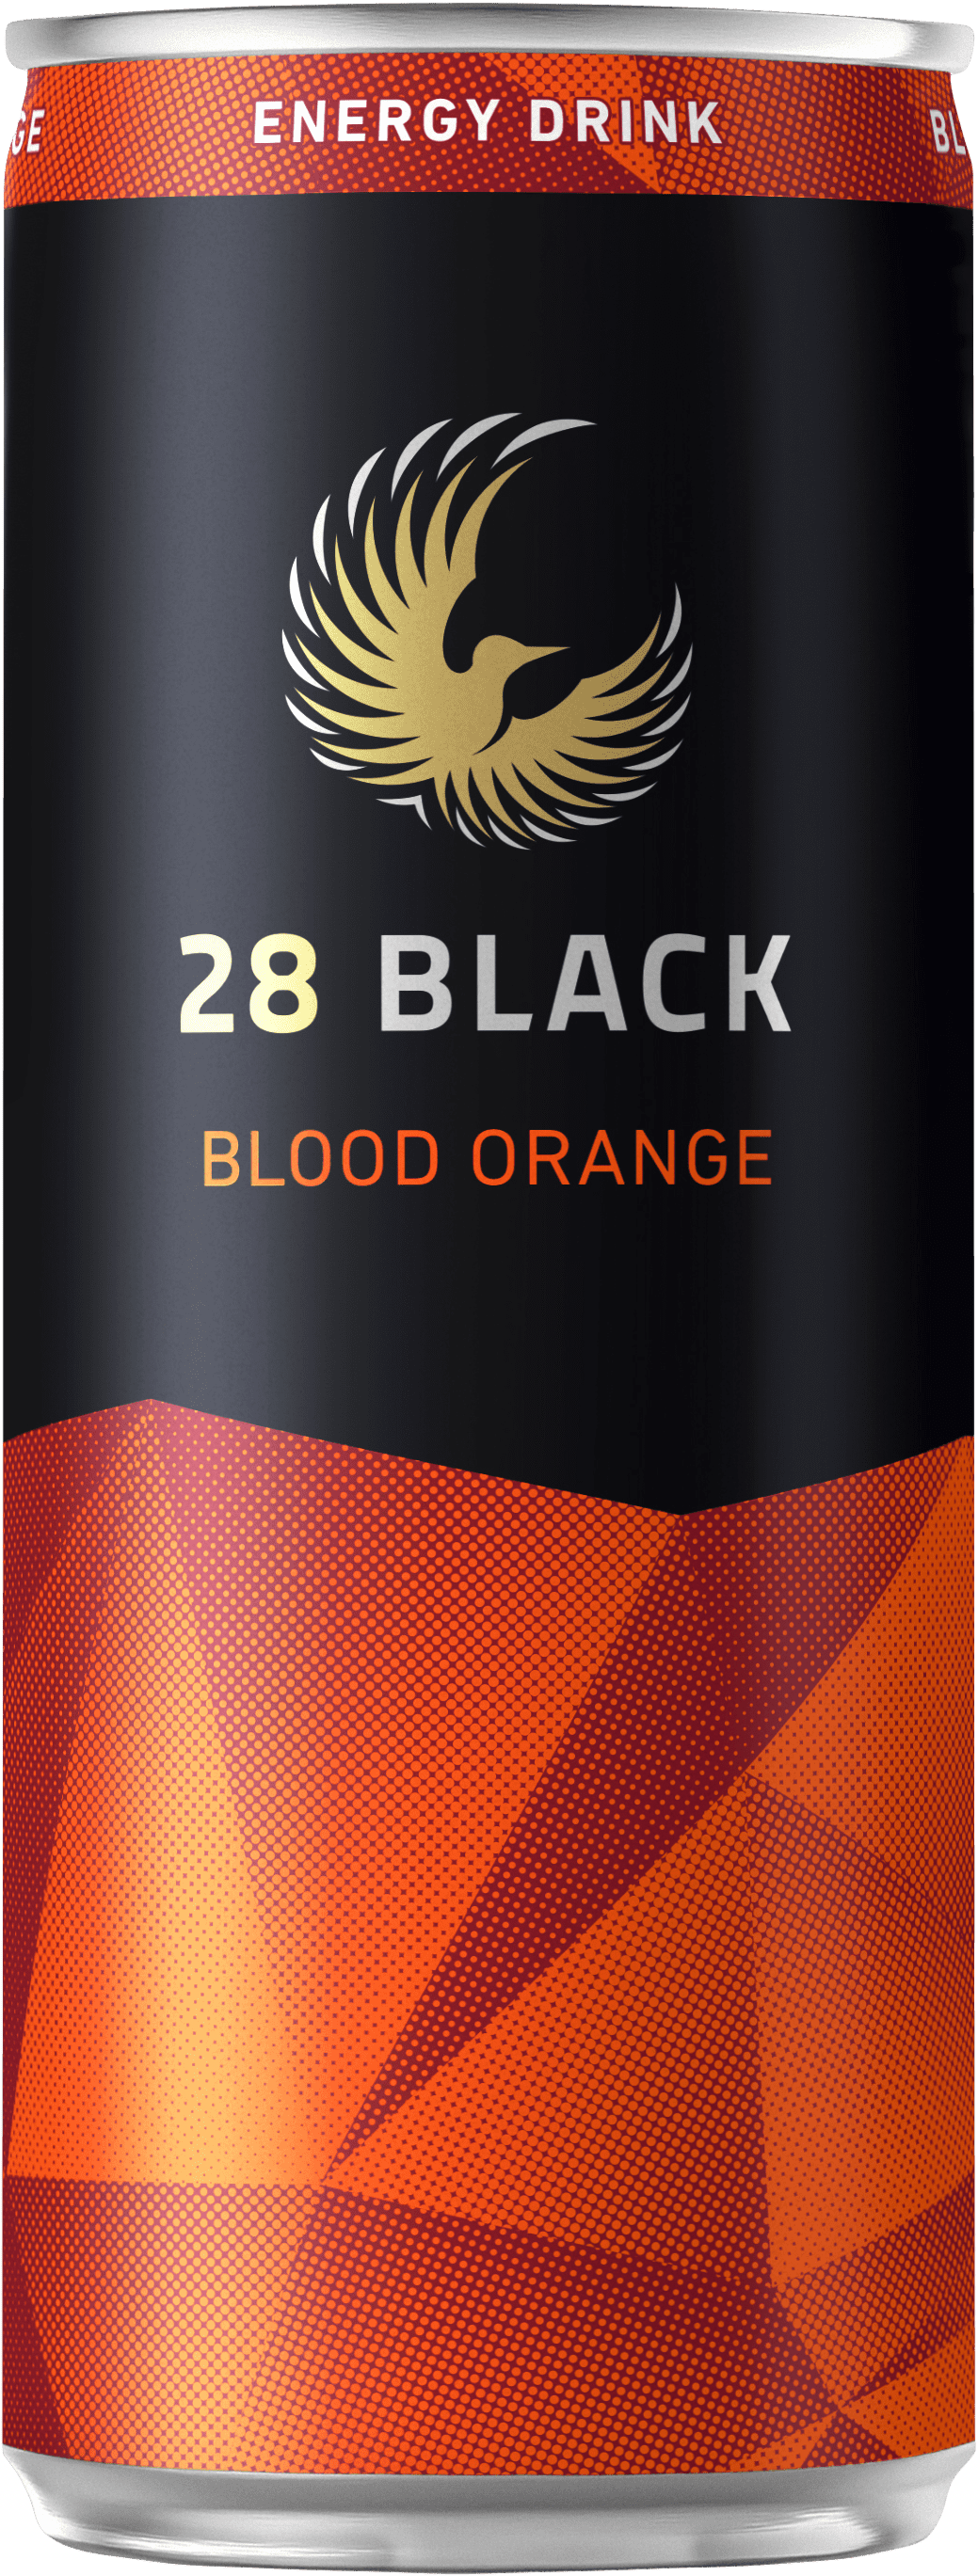 28 Black Blood Orange (1 x 0.25 l)